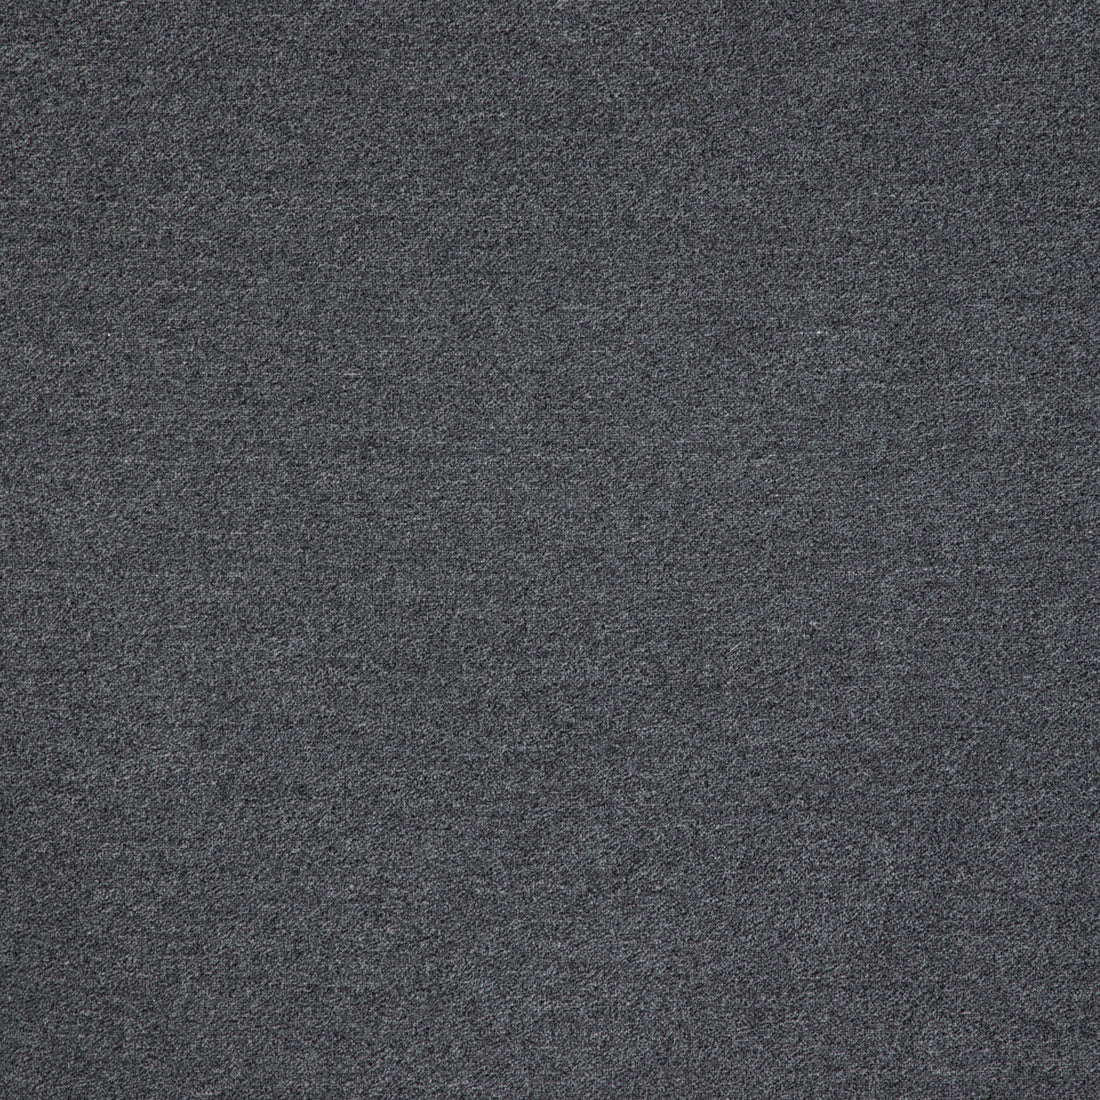 Kravet Smart fabric in 37000-52 color - pattern 37000.52.0 - by Kravet Smart in the Performance Kravetarmor collection